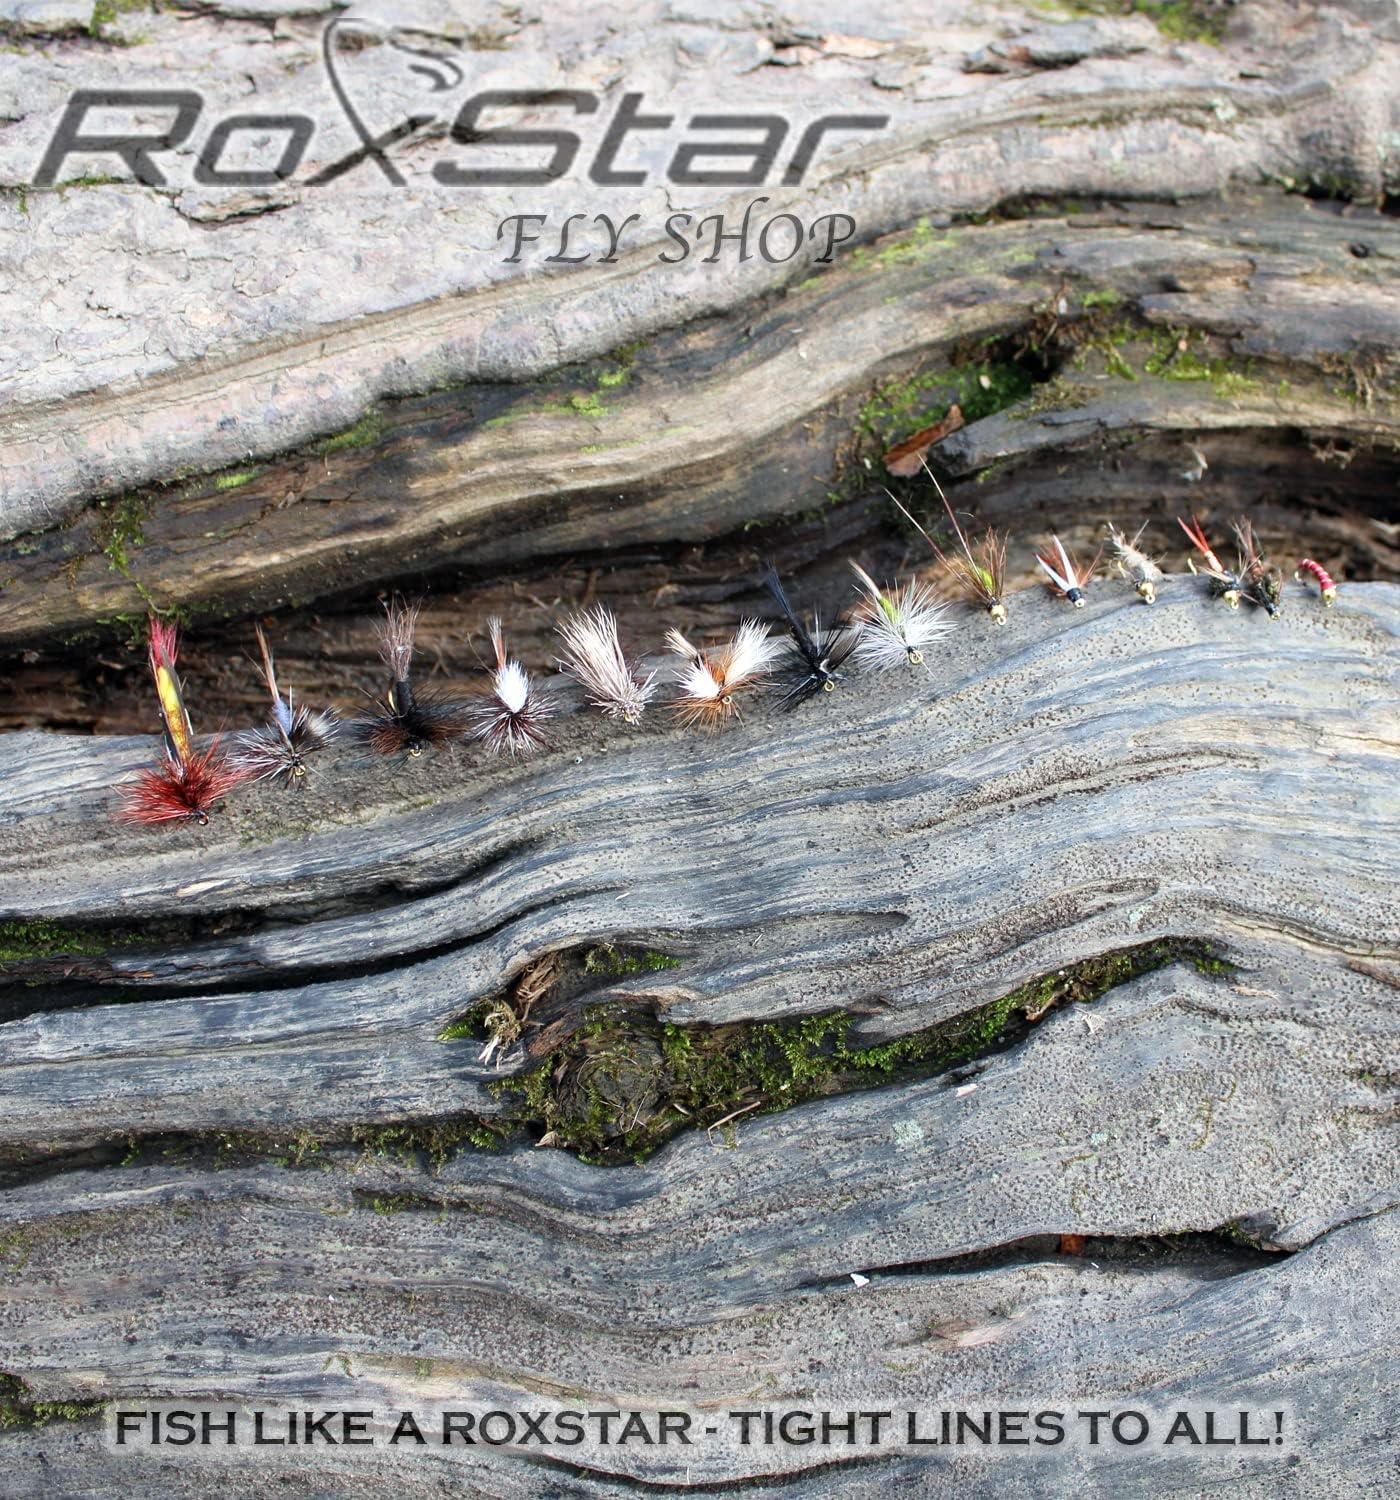  RoxStar Fly Fishing Shop